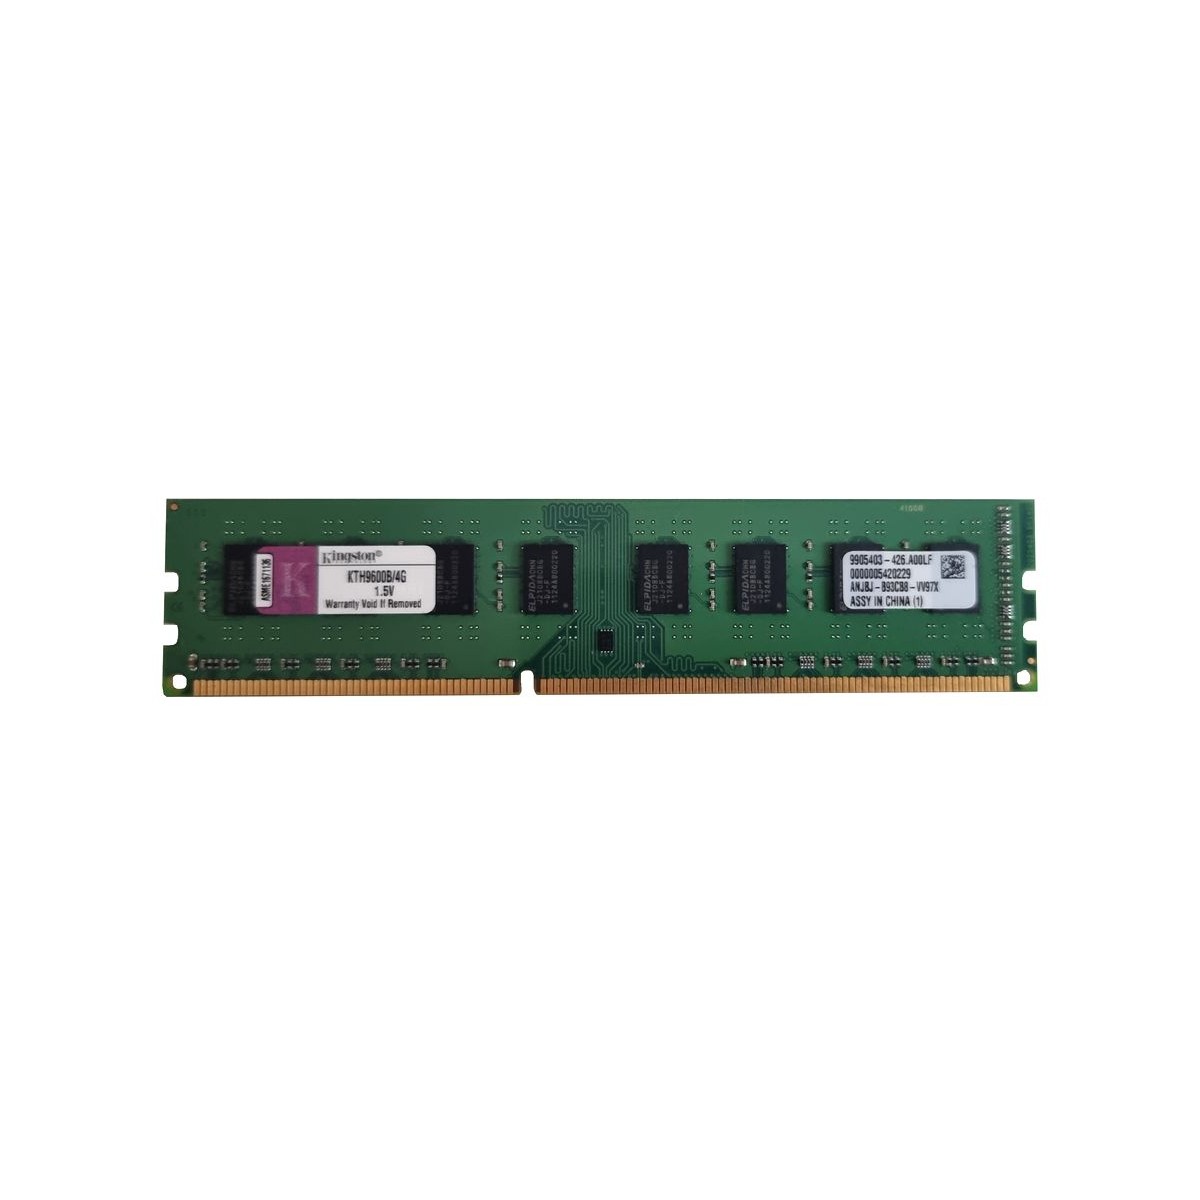 KINGSTON 4GB DDR3 PC3-10600 1333MHz KTH9600B/4G